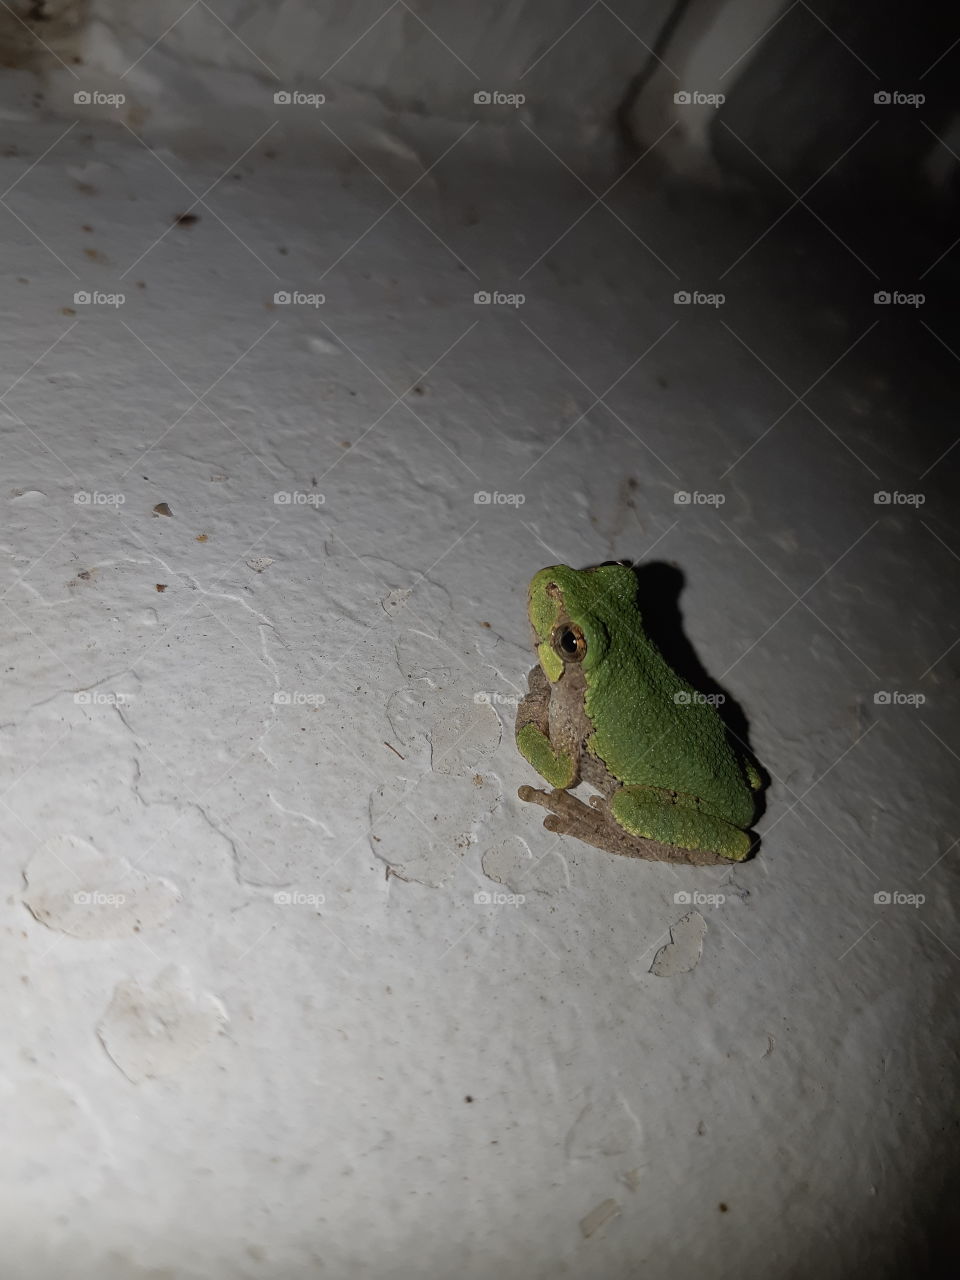 Green little frog